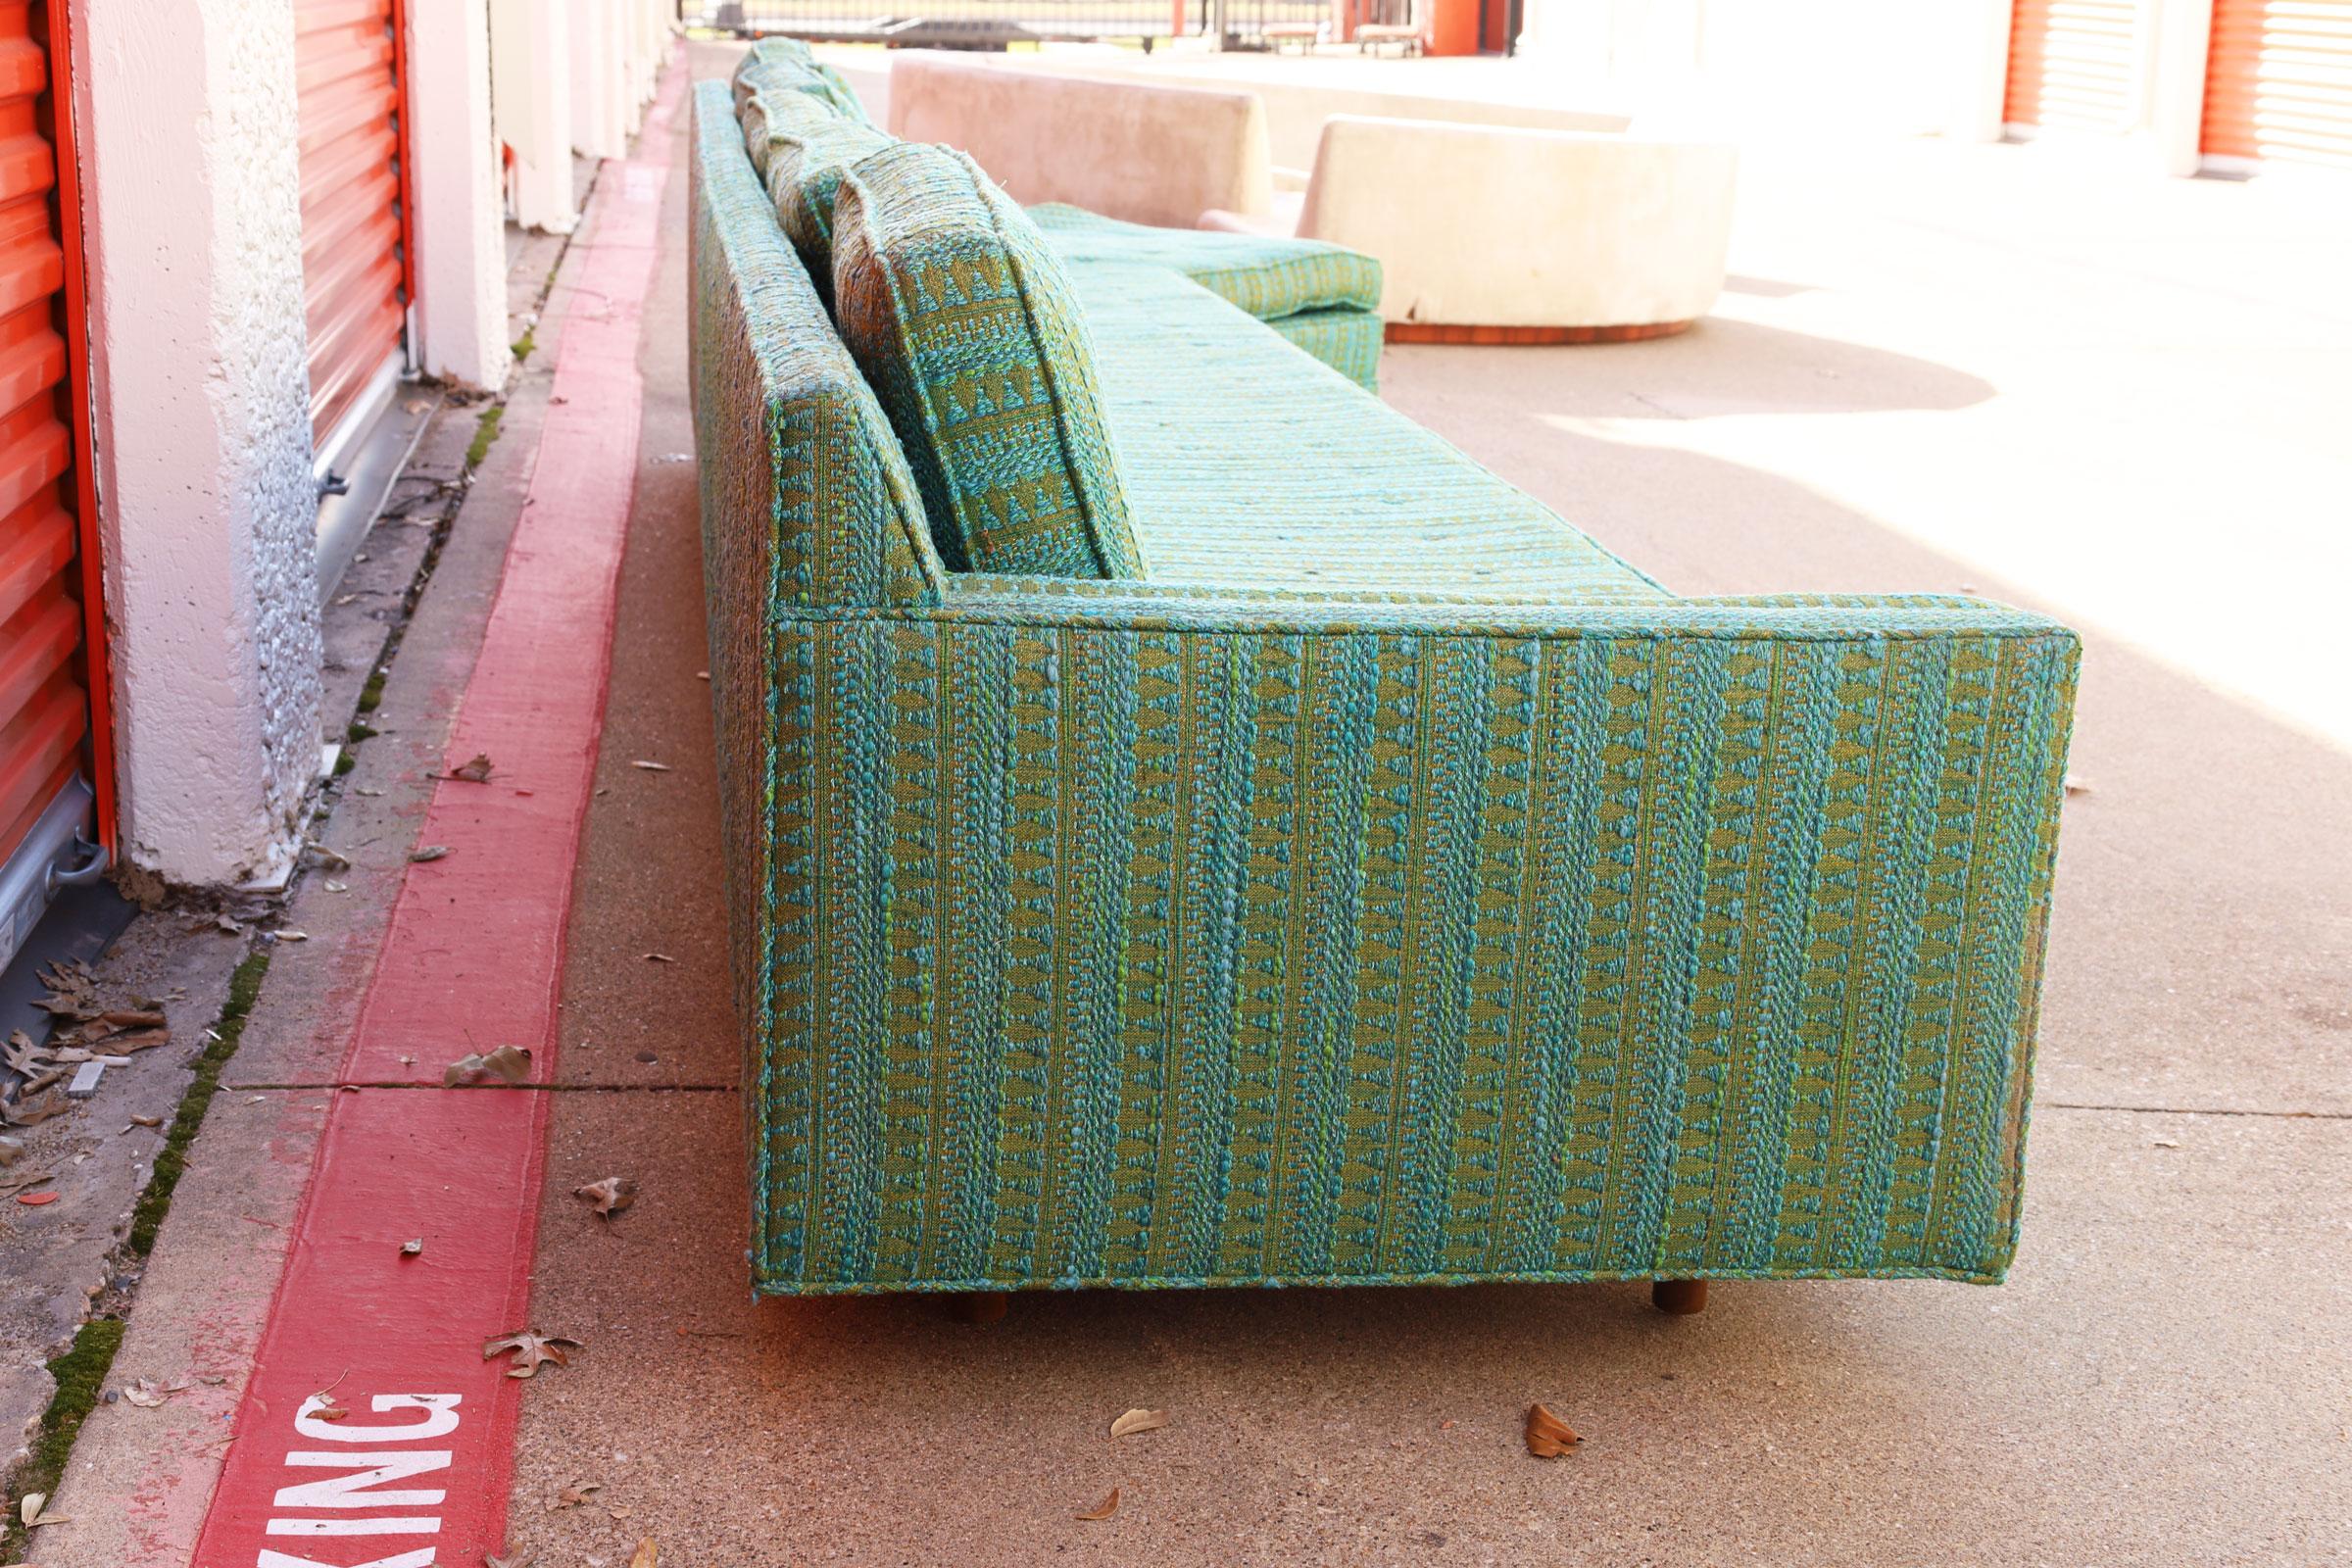 Harvey Probber Impressive 16 Foot Angle Sofa In Good Condition For Sale In Dallas, TX